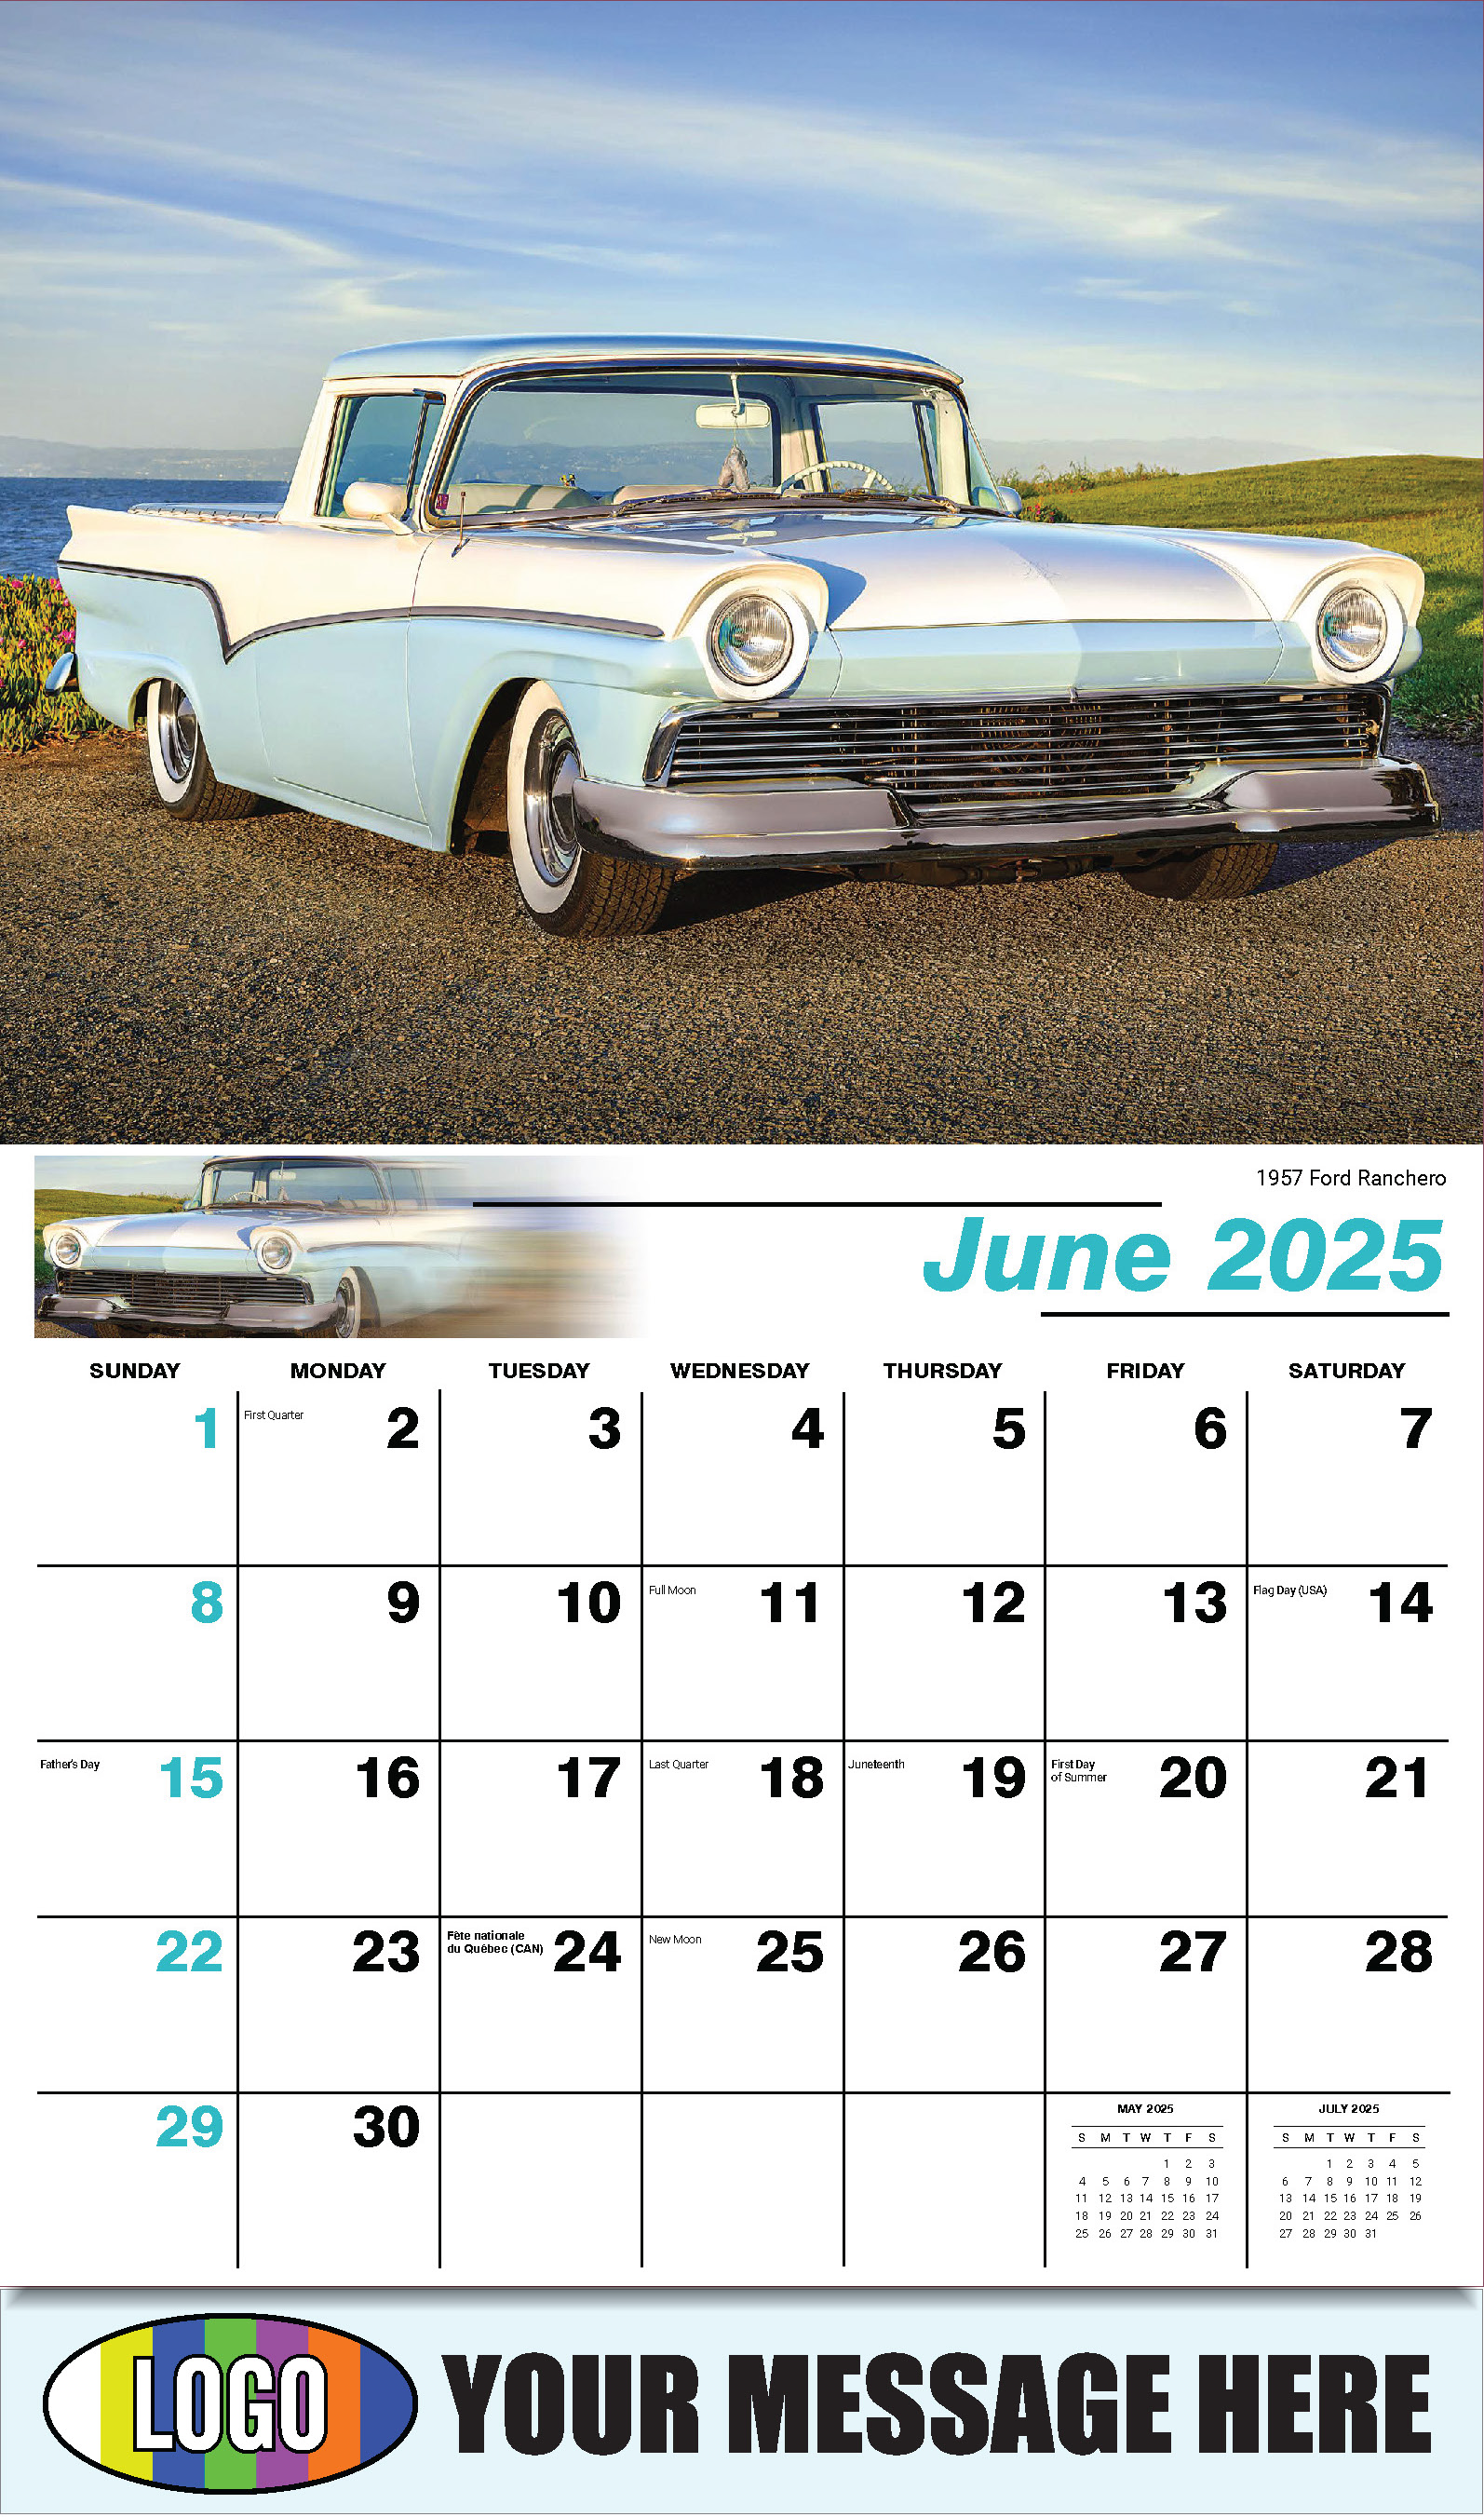 Henry's Heritage FORD Cars 2025 Automotive Business Promo Calendar - June